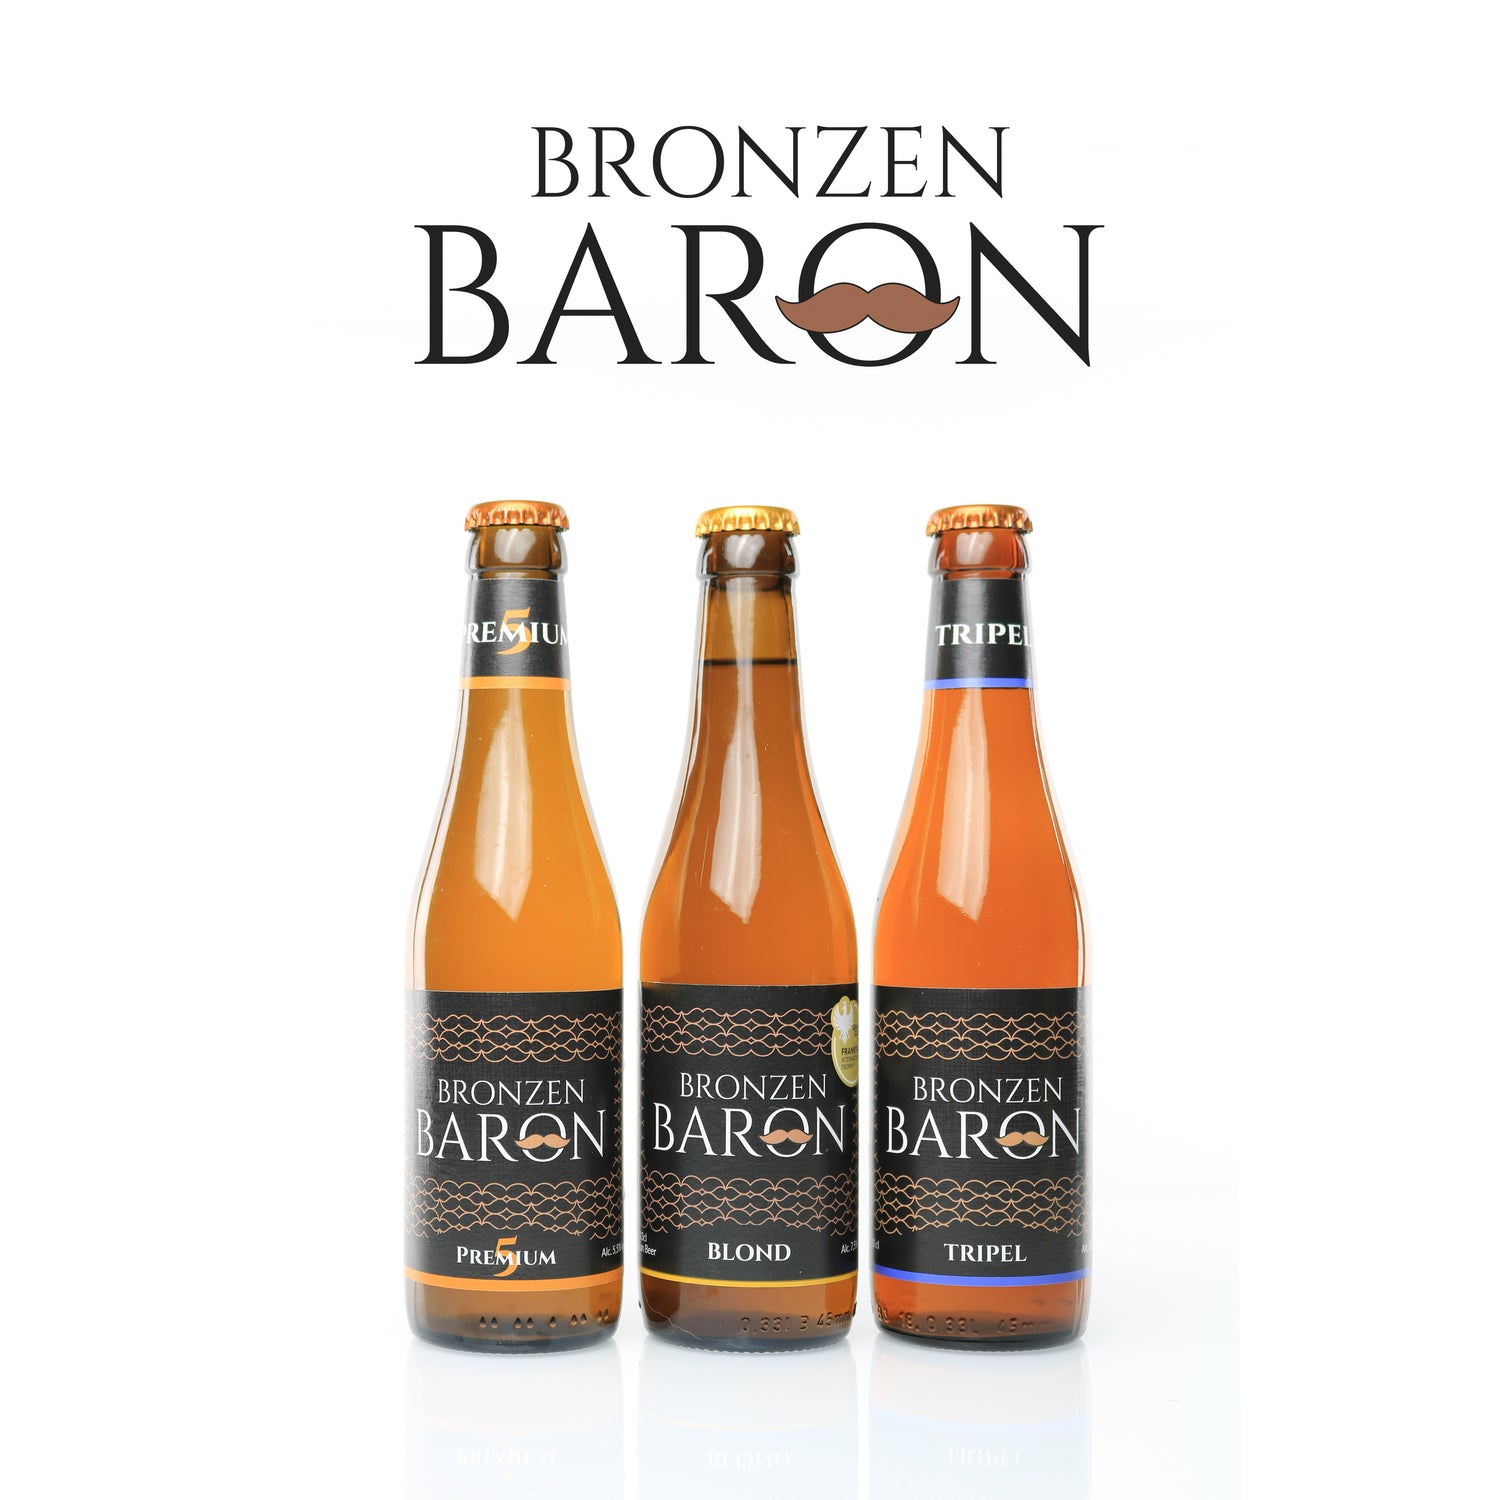 Bronzen Baron